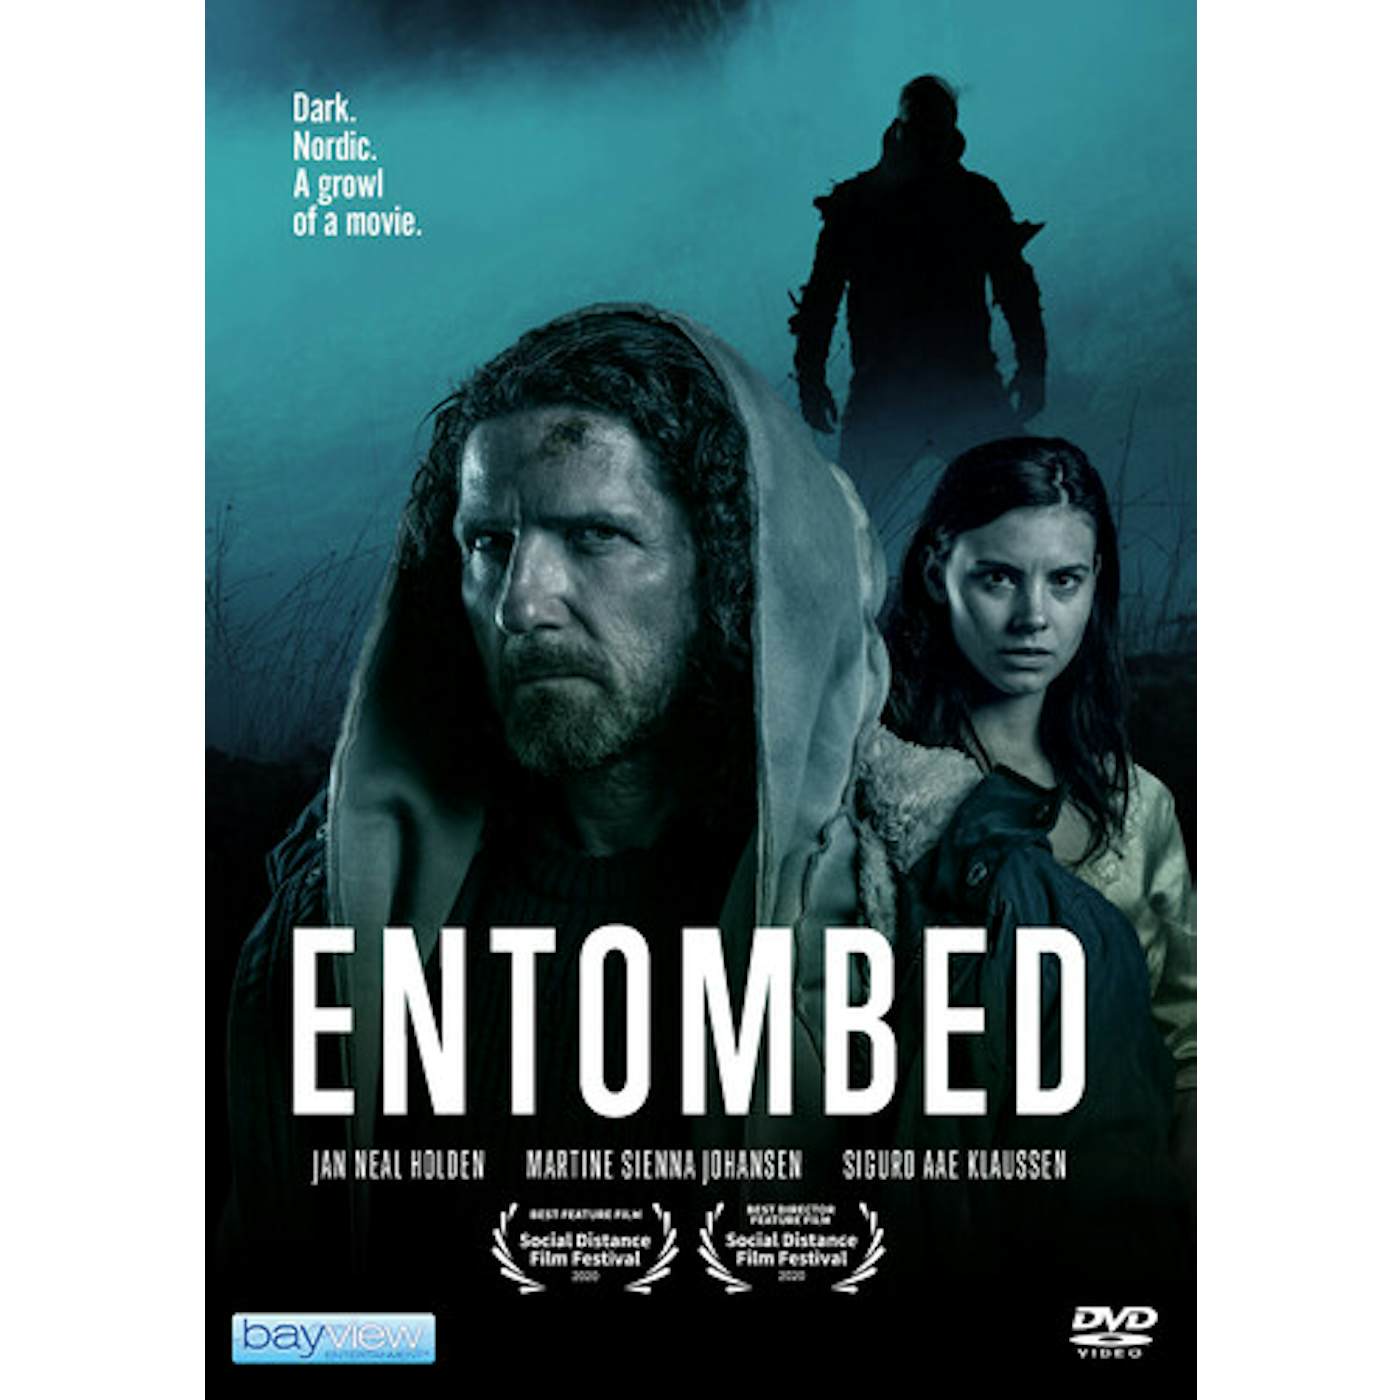 ENTOMBED DVD